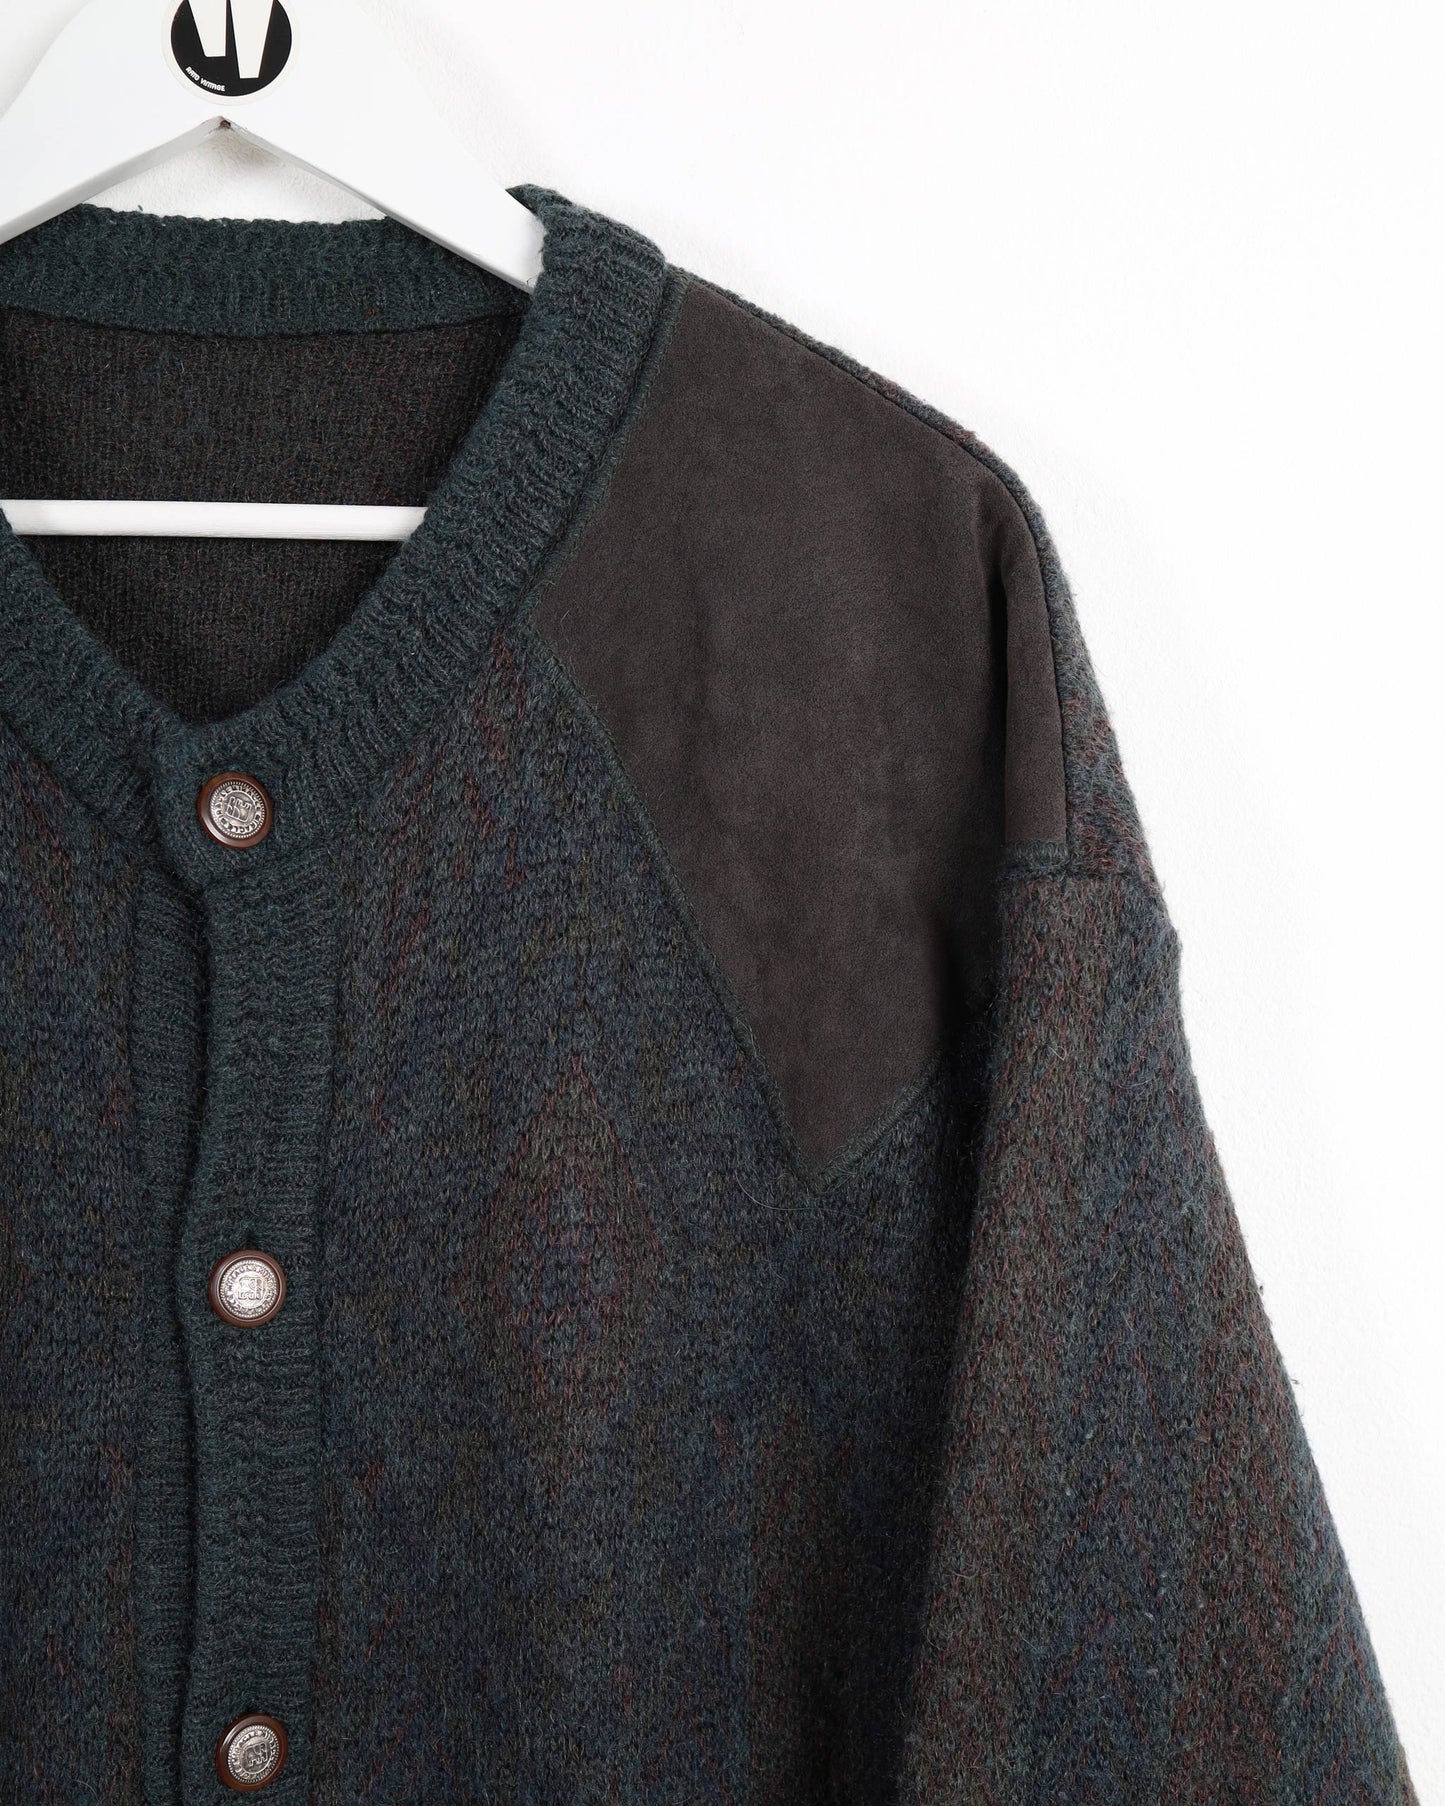 Cardigan Vintage Wool Button Shoulder Suede